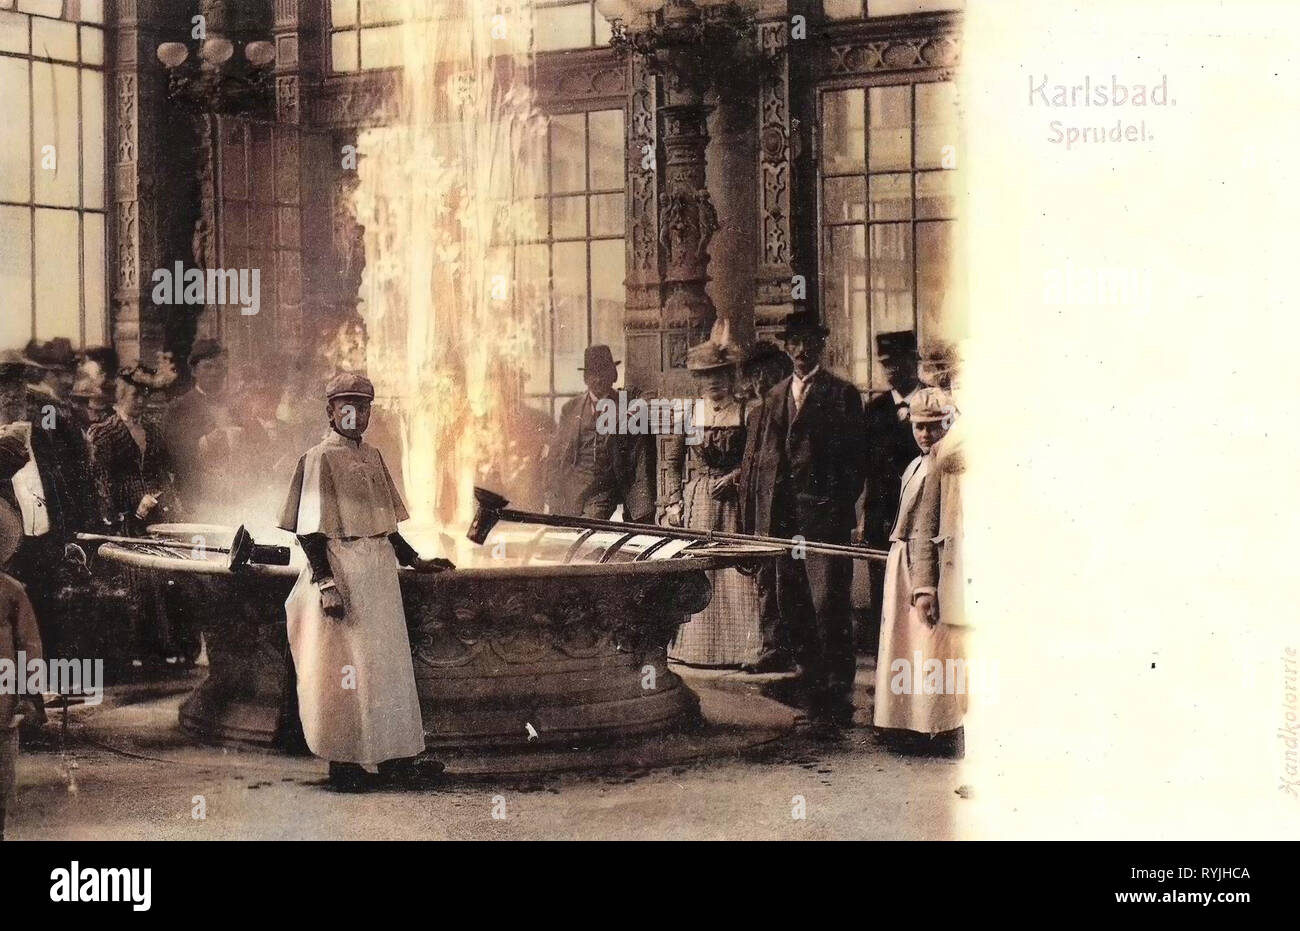 Vřídlo (Karlovy Vary), 1898, Karlovy Vary Region, Karlsbad, Sprudel, Czech Republic Stock Photo